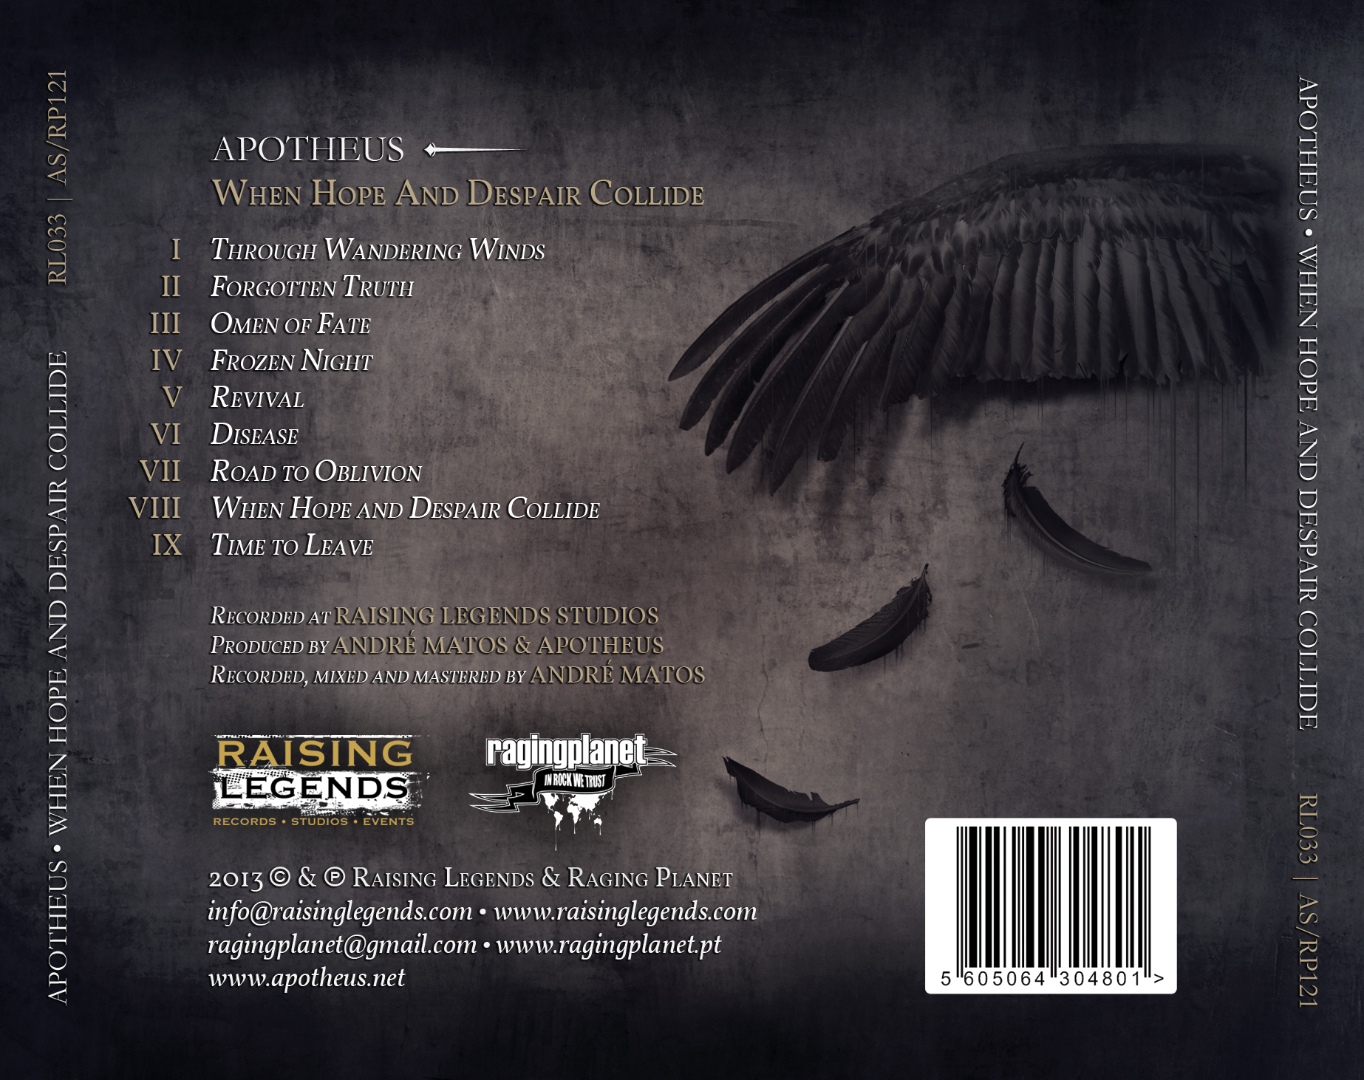 Apotheus band back cover artwork